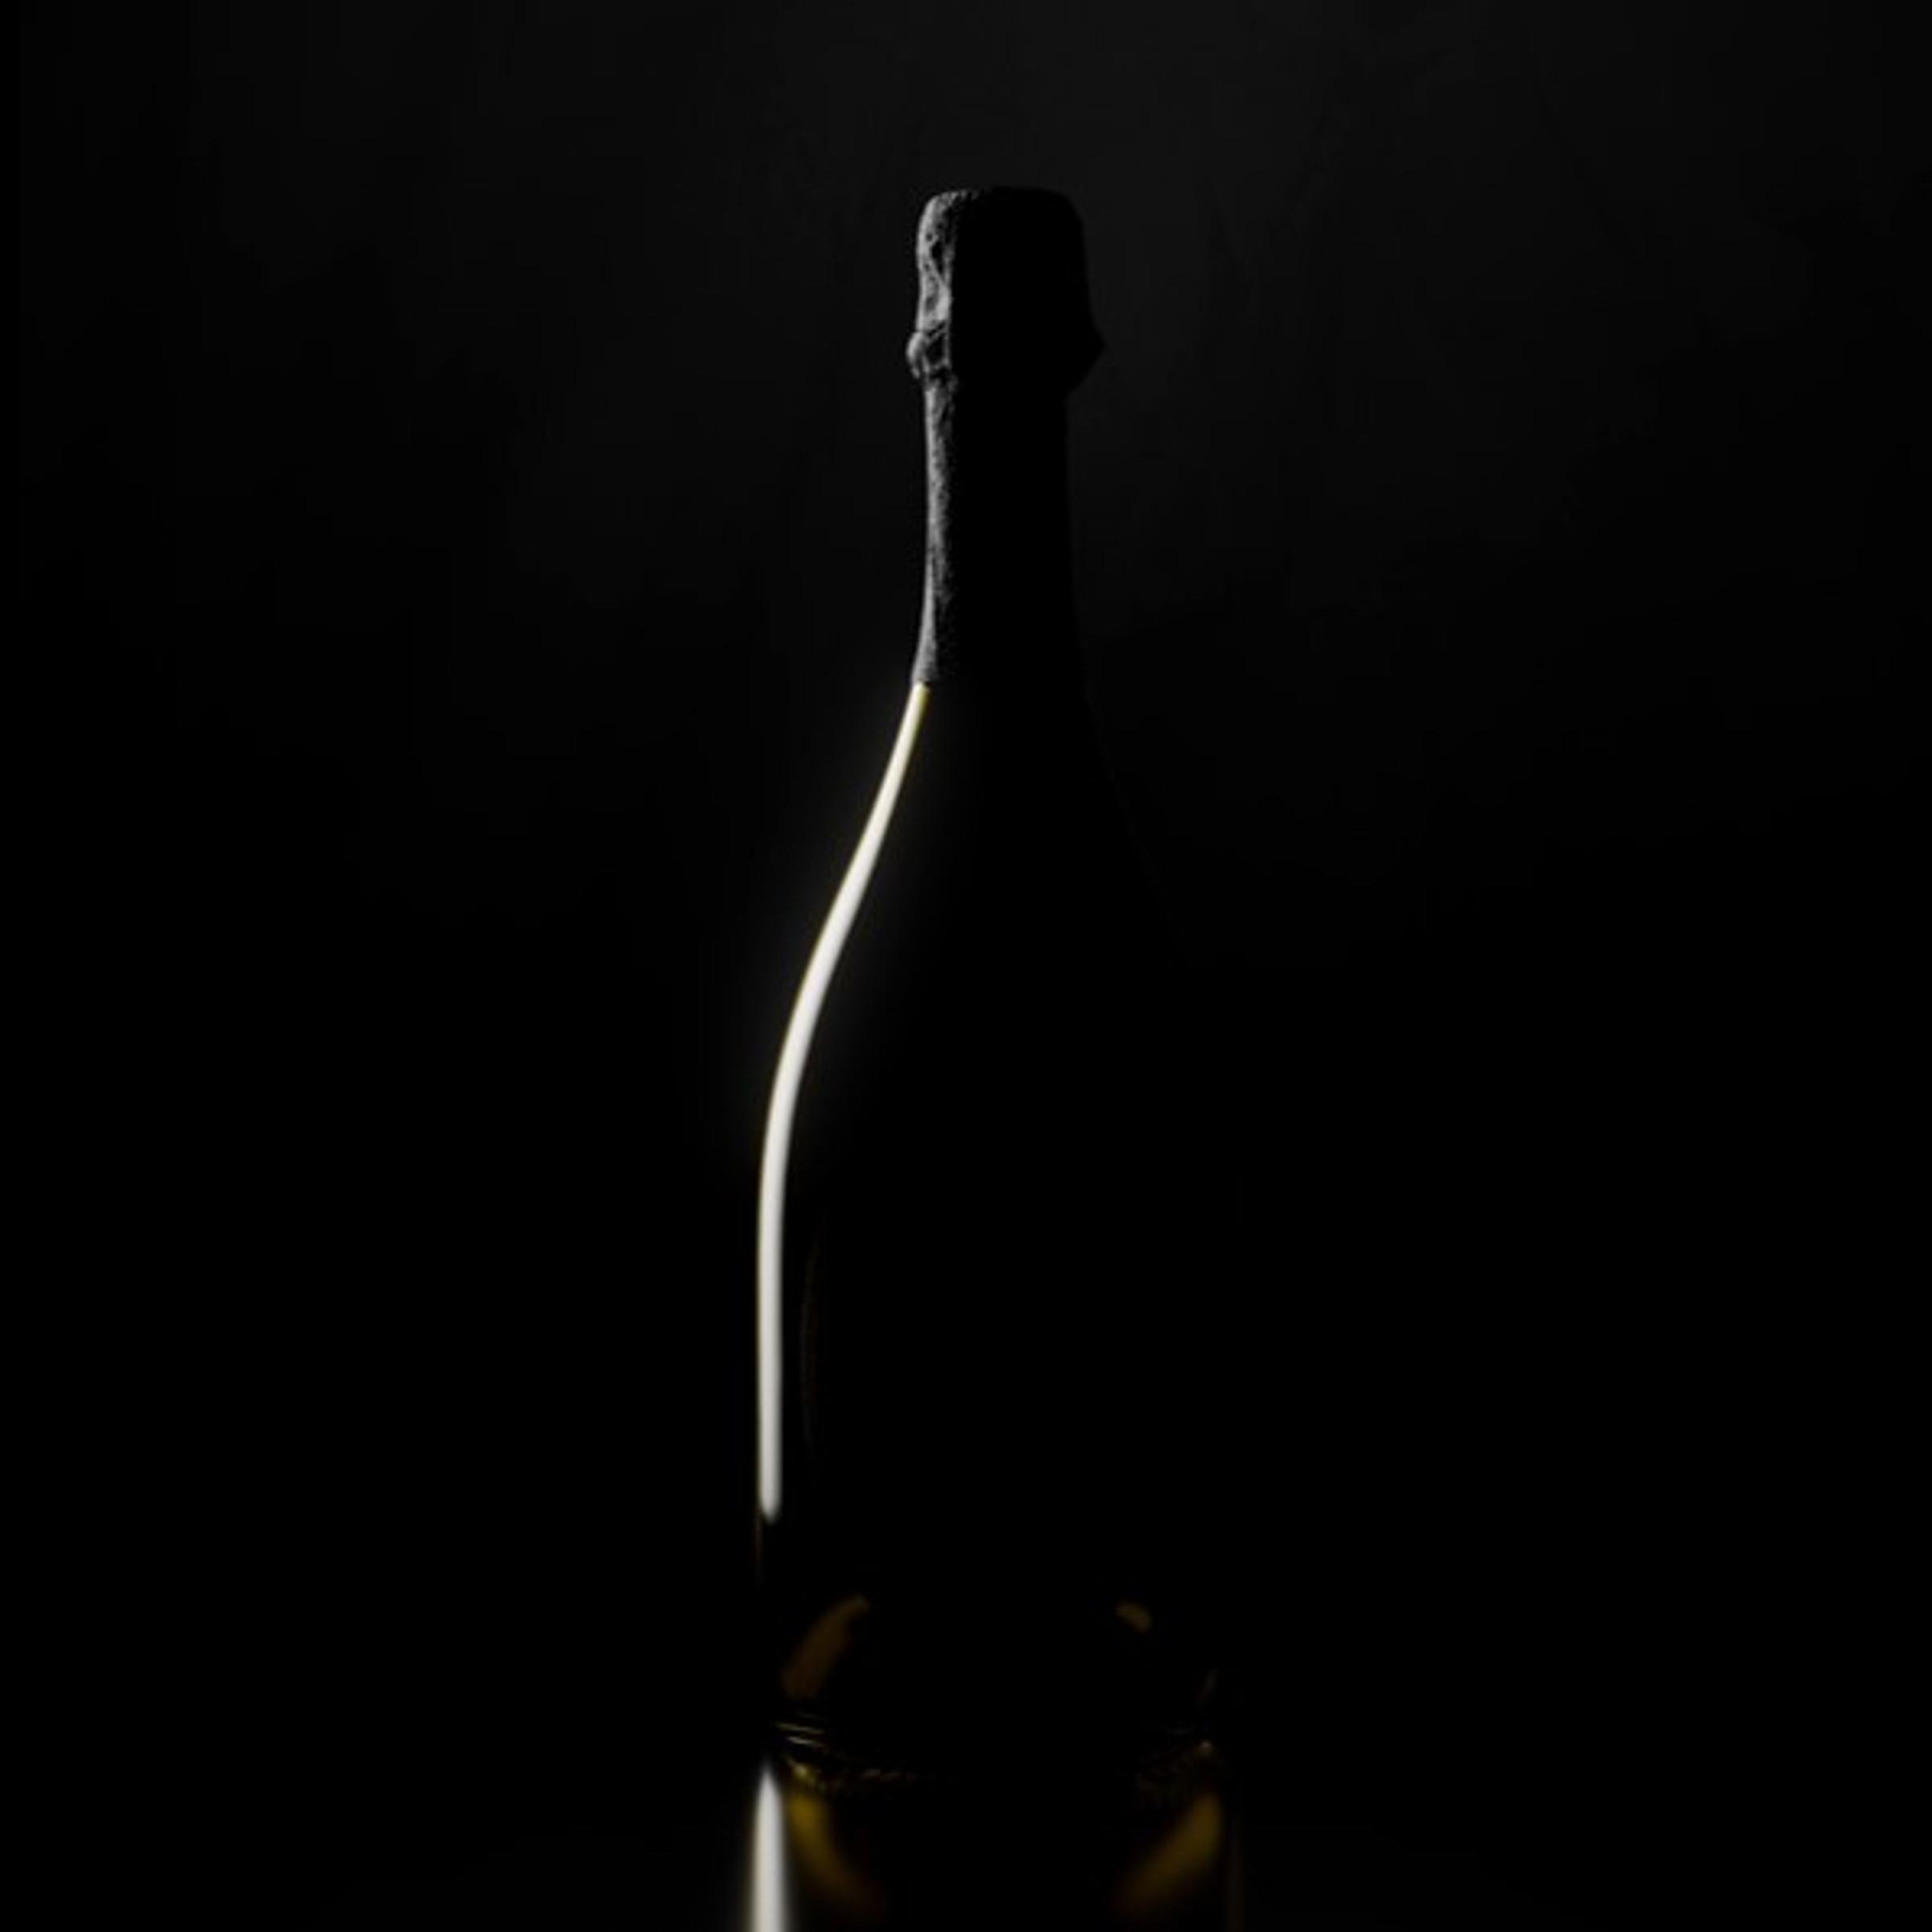 2012 Dom Perignon Champagne 750ml – SommPicks